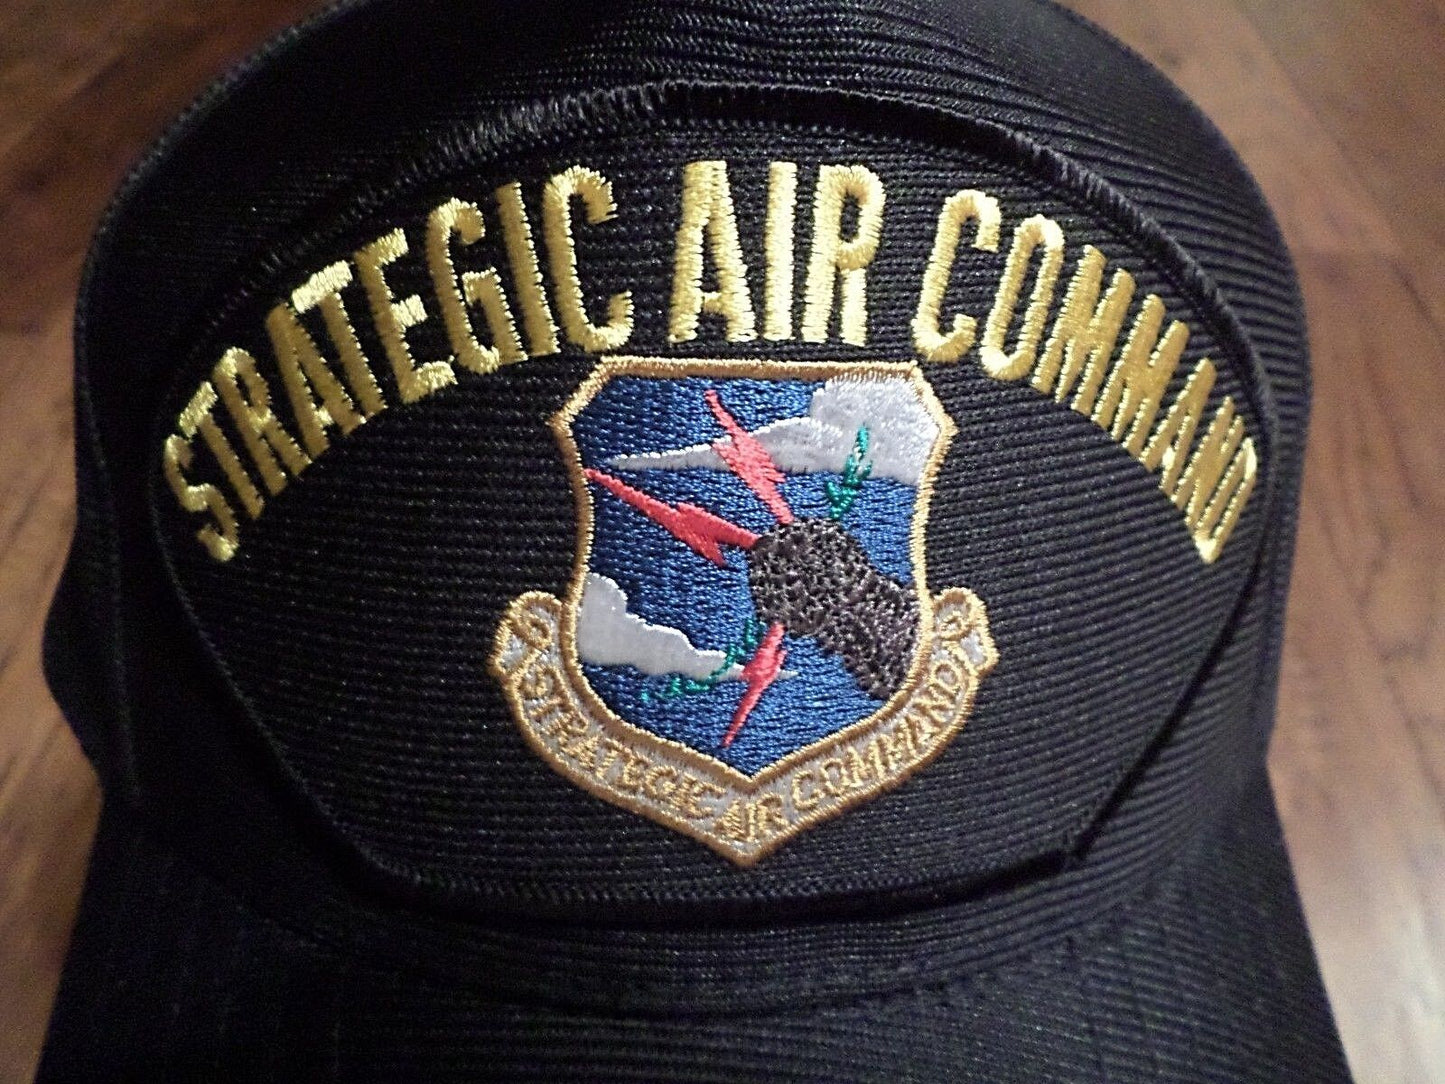 U.S AIR FORCE SAC MILITARY HAT OFFICIAL BALL CAP STRATEGIC AIR COMMAND USA MADE